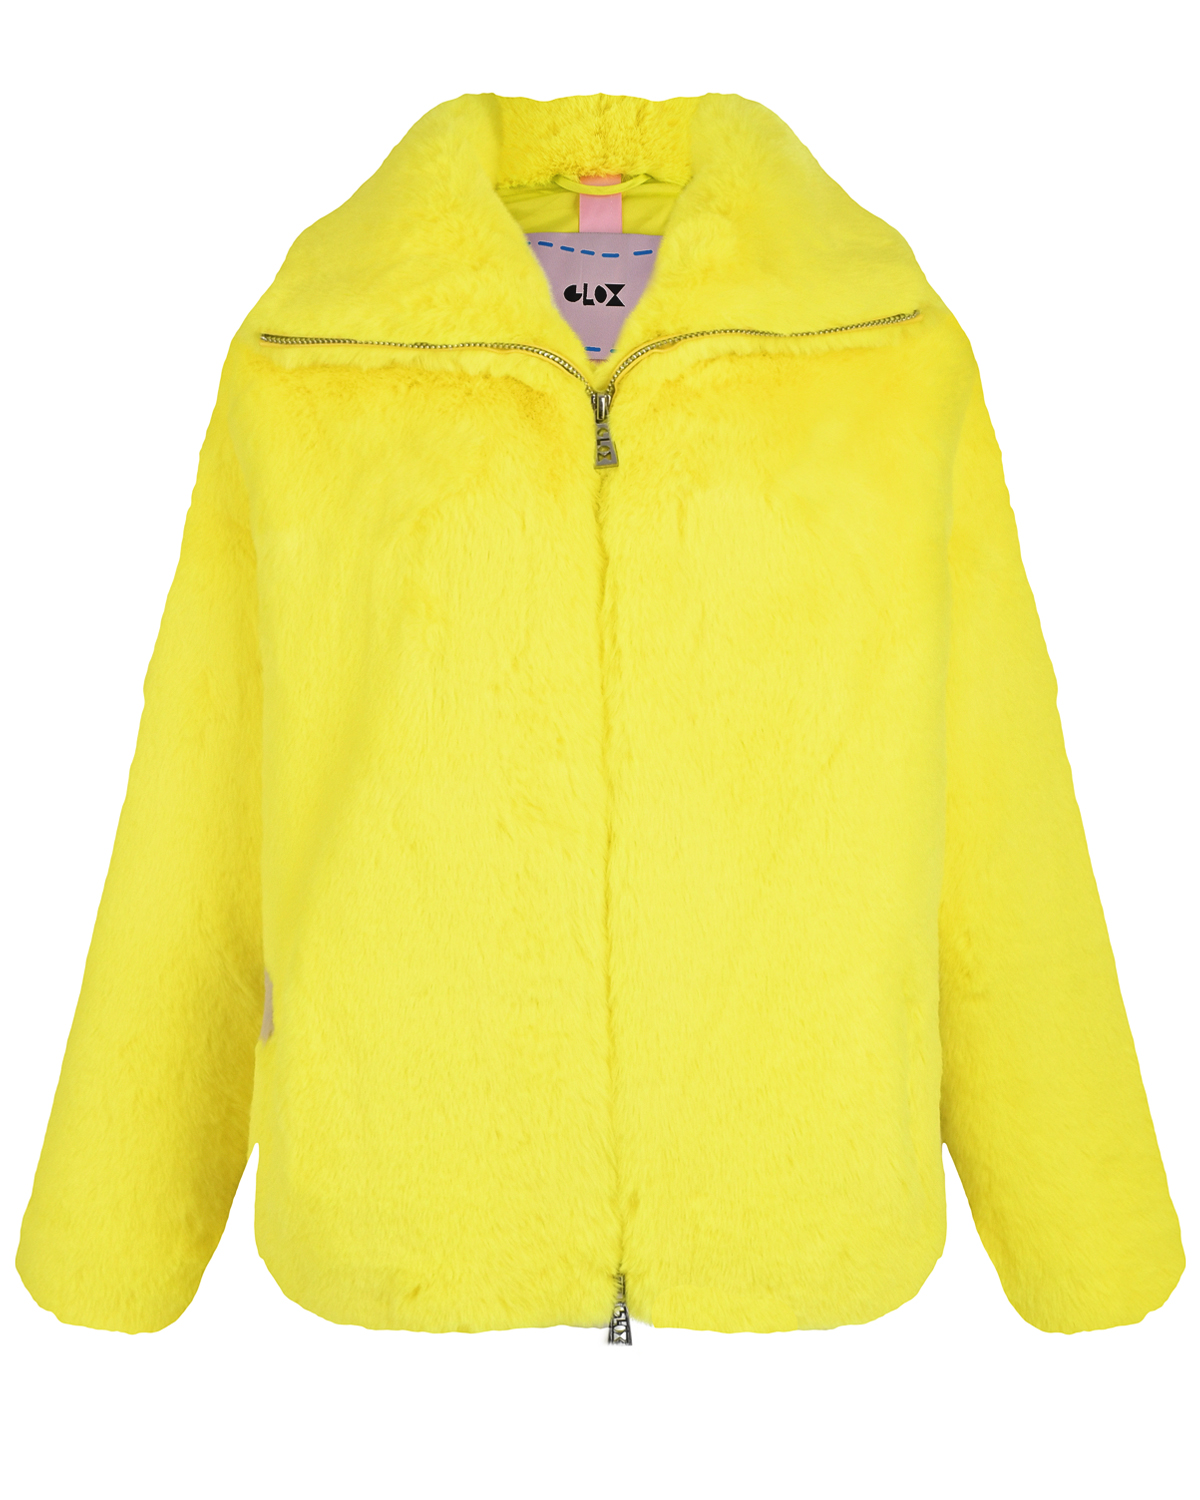 Желтая куртка из эко-меха Glox, размер 40, цвет желтый - фото 1